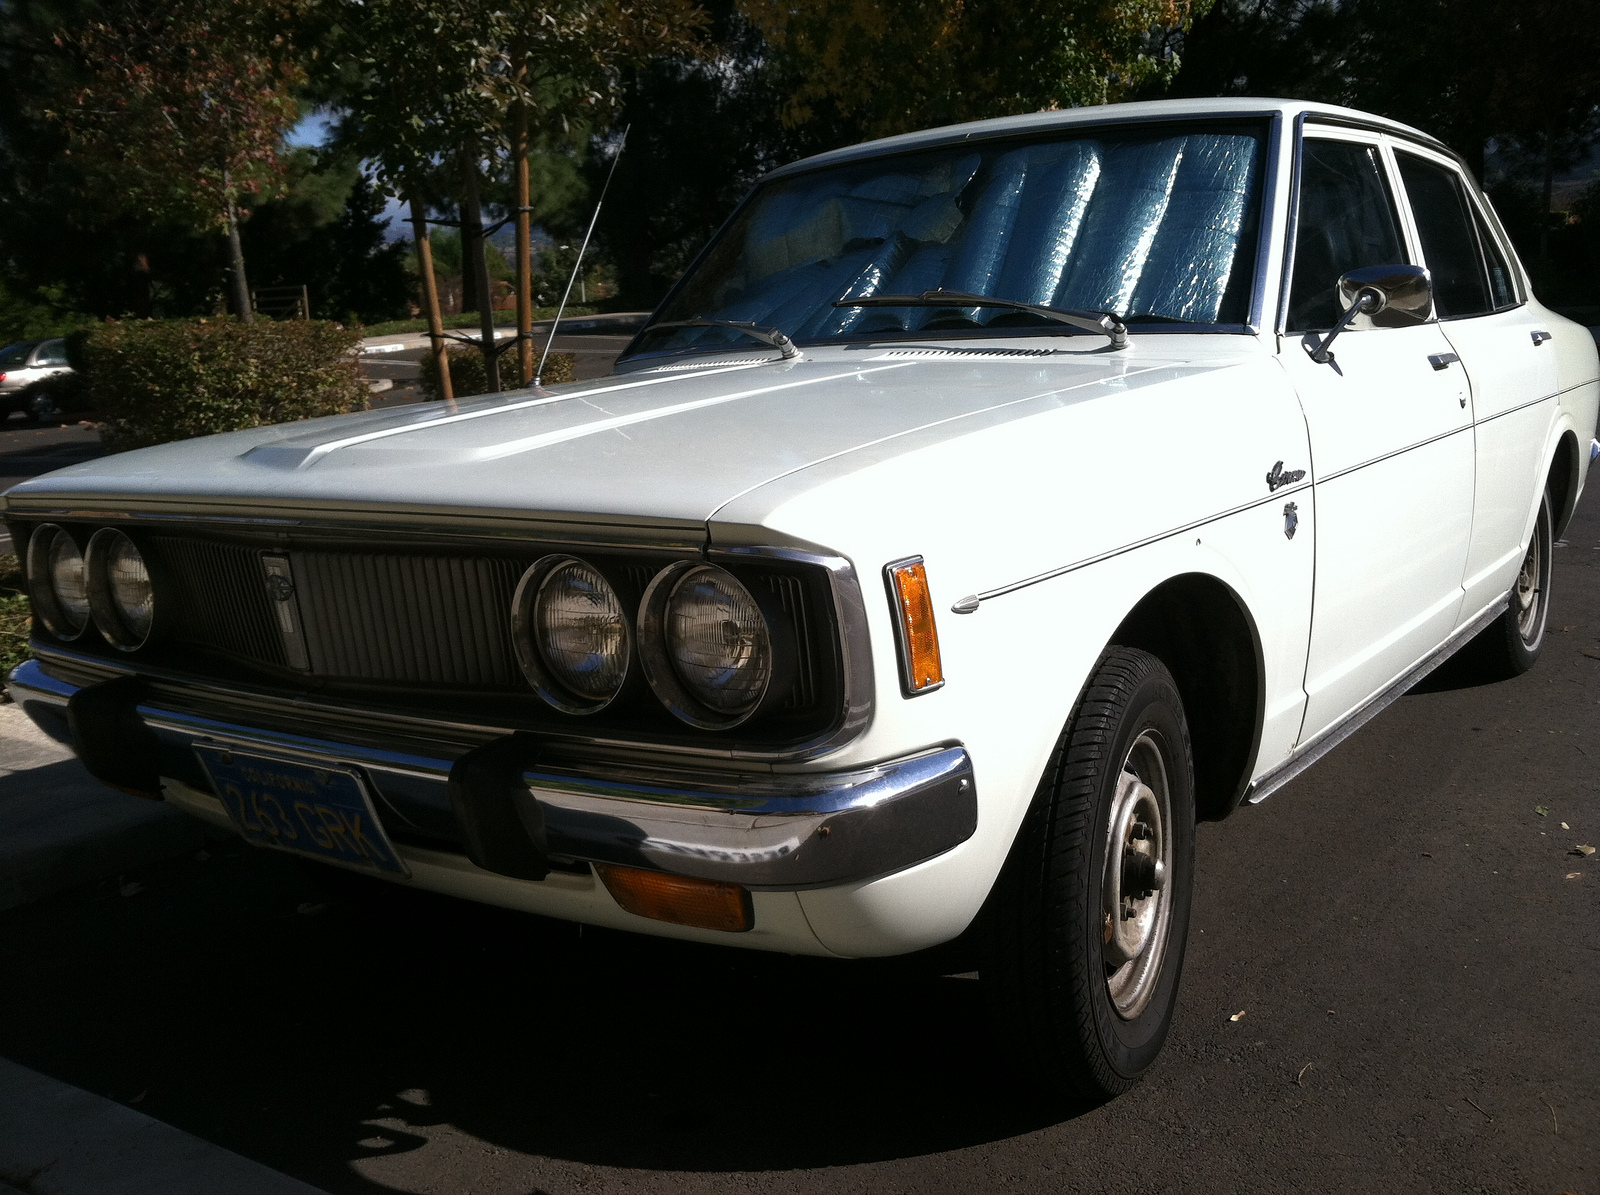 Toyota Corona Deluxe Automatique 1972 / Flickr - Partage de photos!